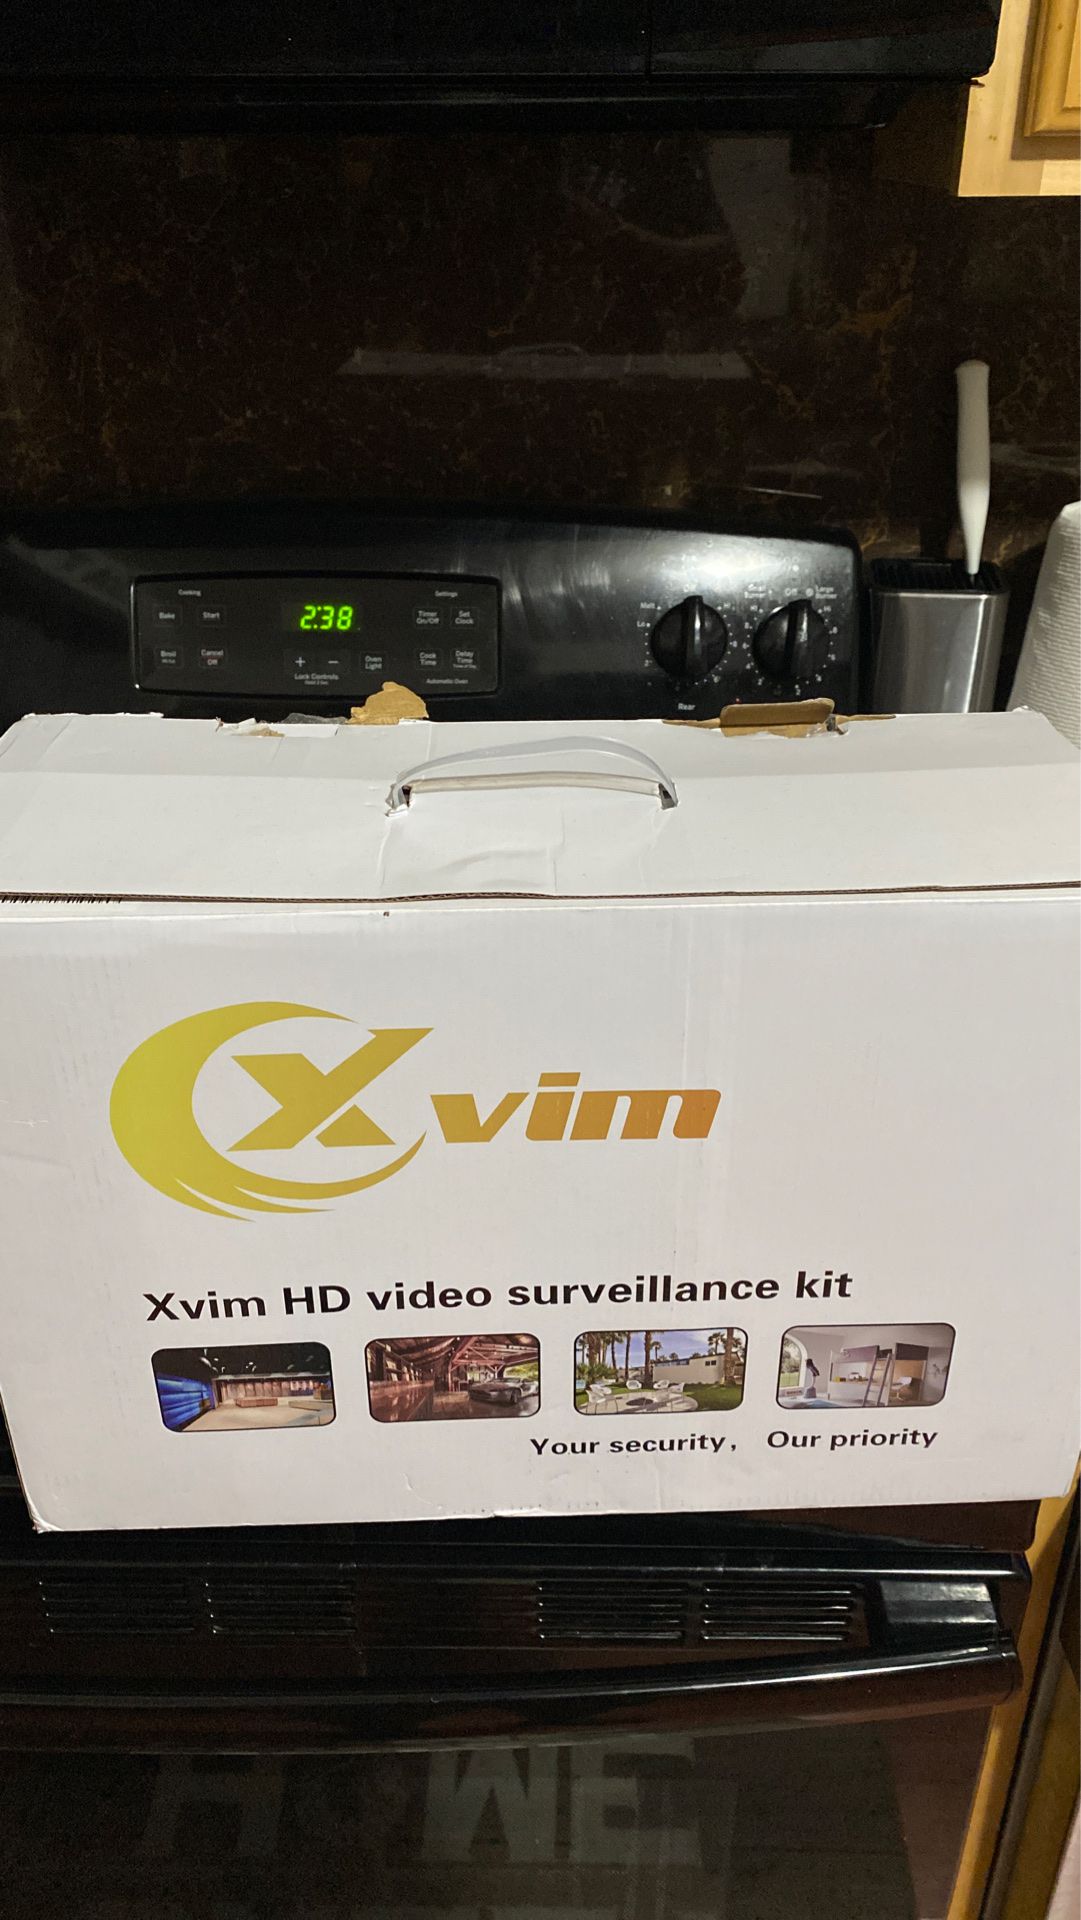 HD surveillance kit